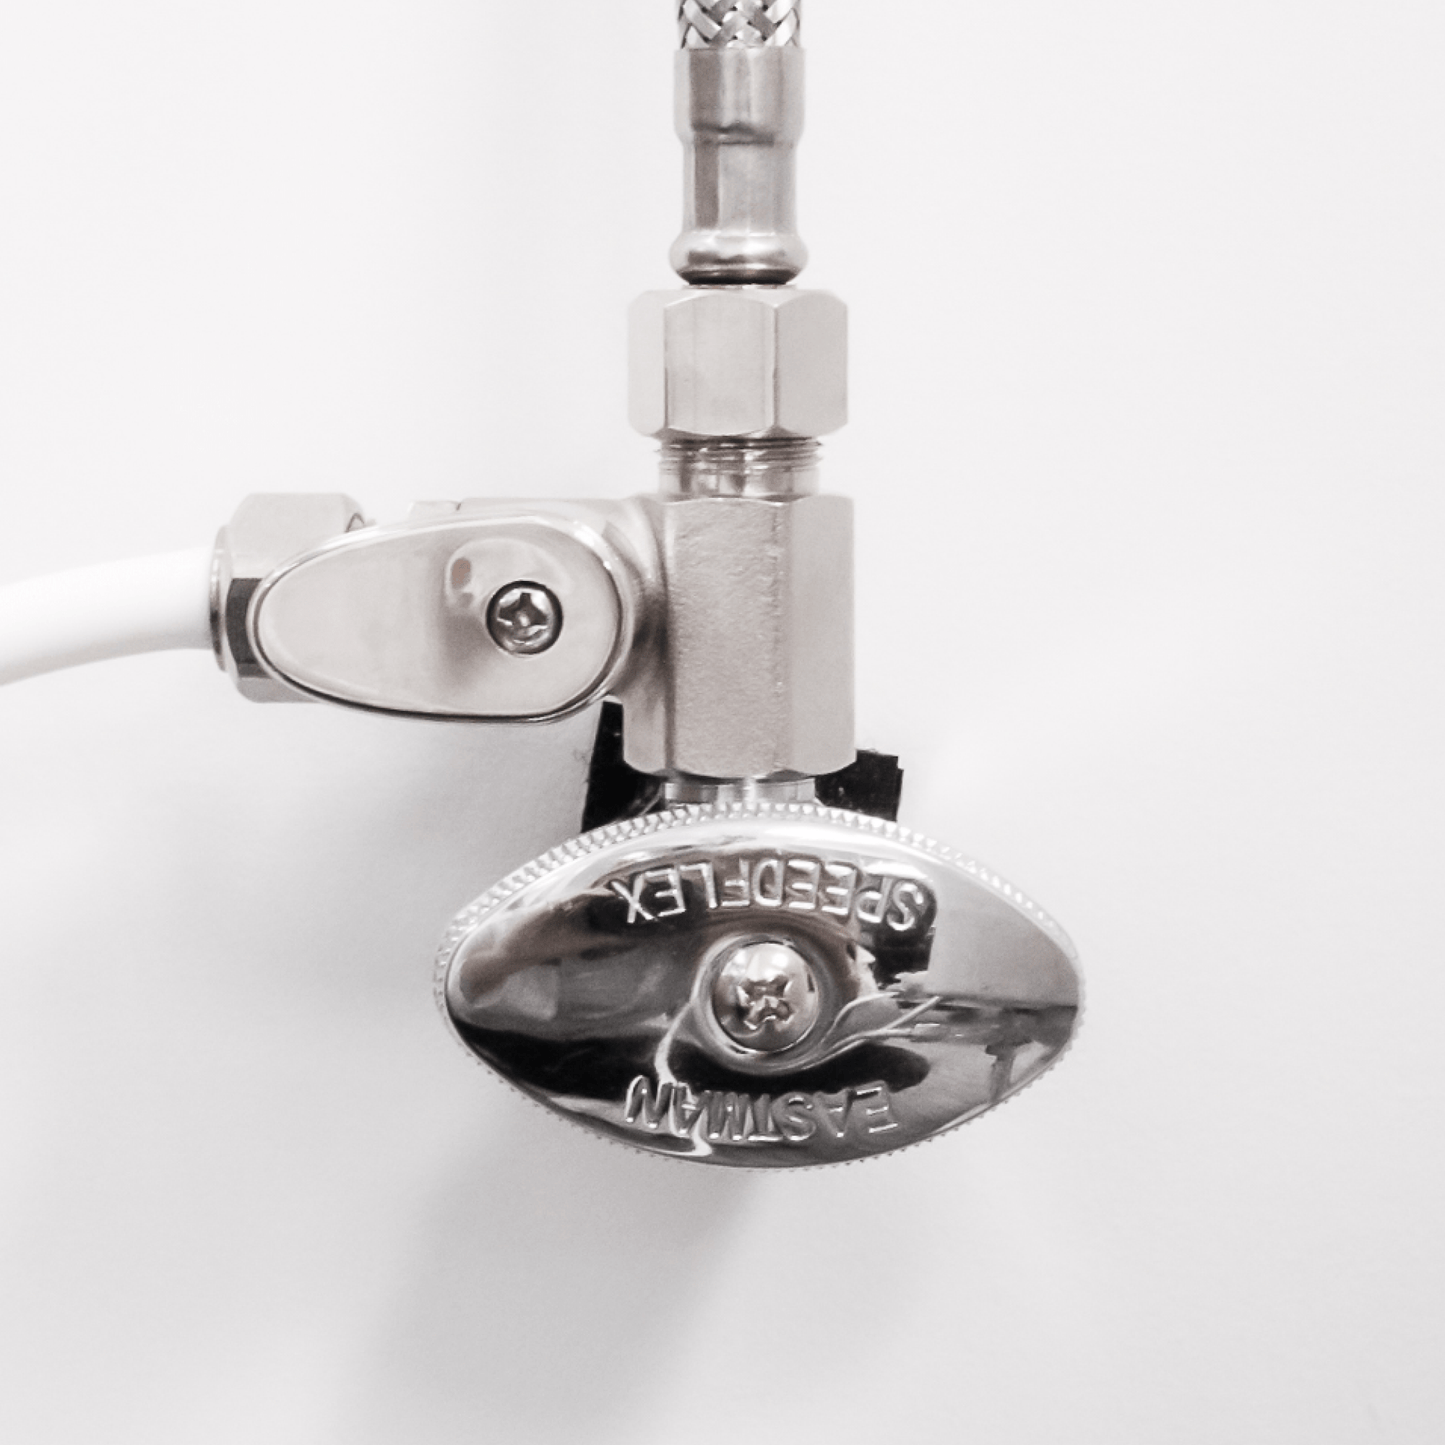 Hot Water Teardrop Nickel Shut-Off T-Adapter installed at sink supply valve, in on position